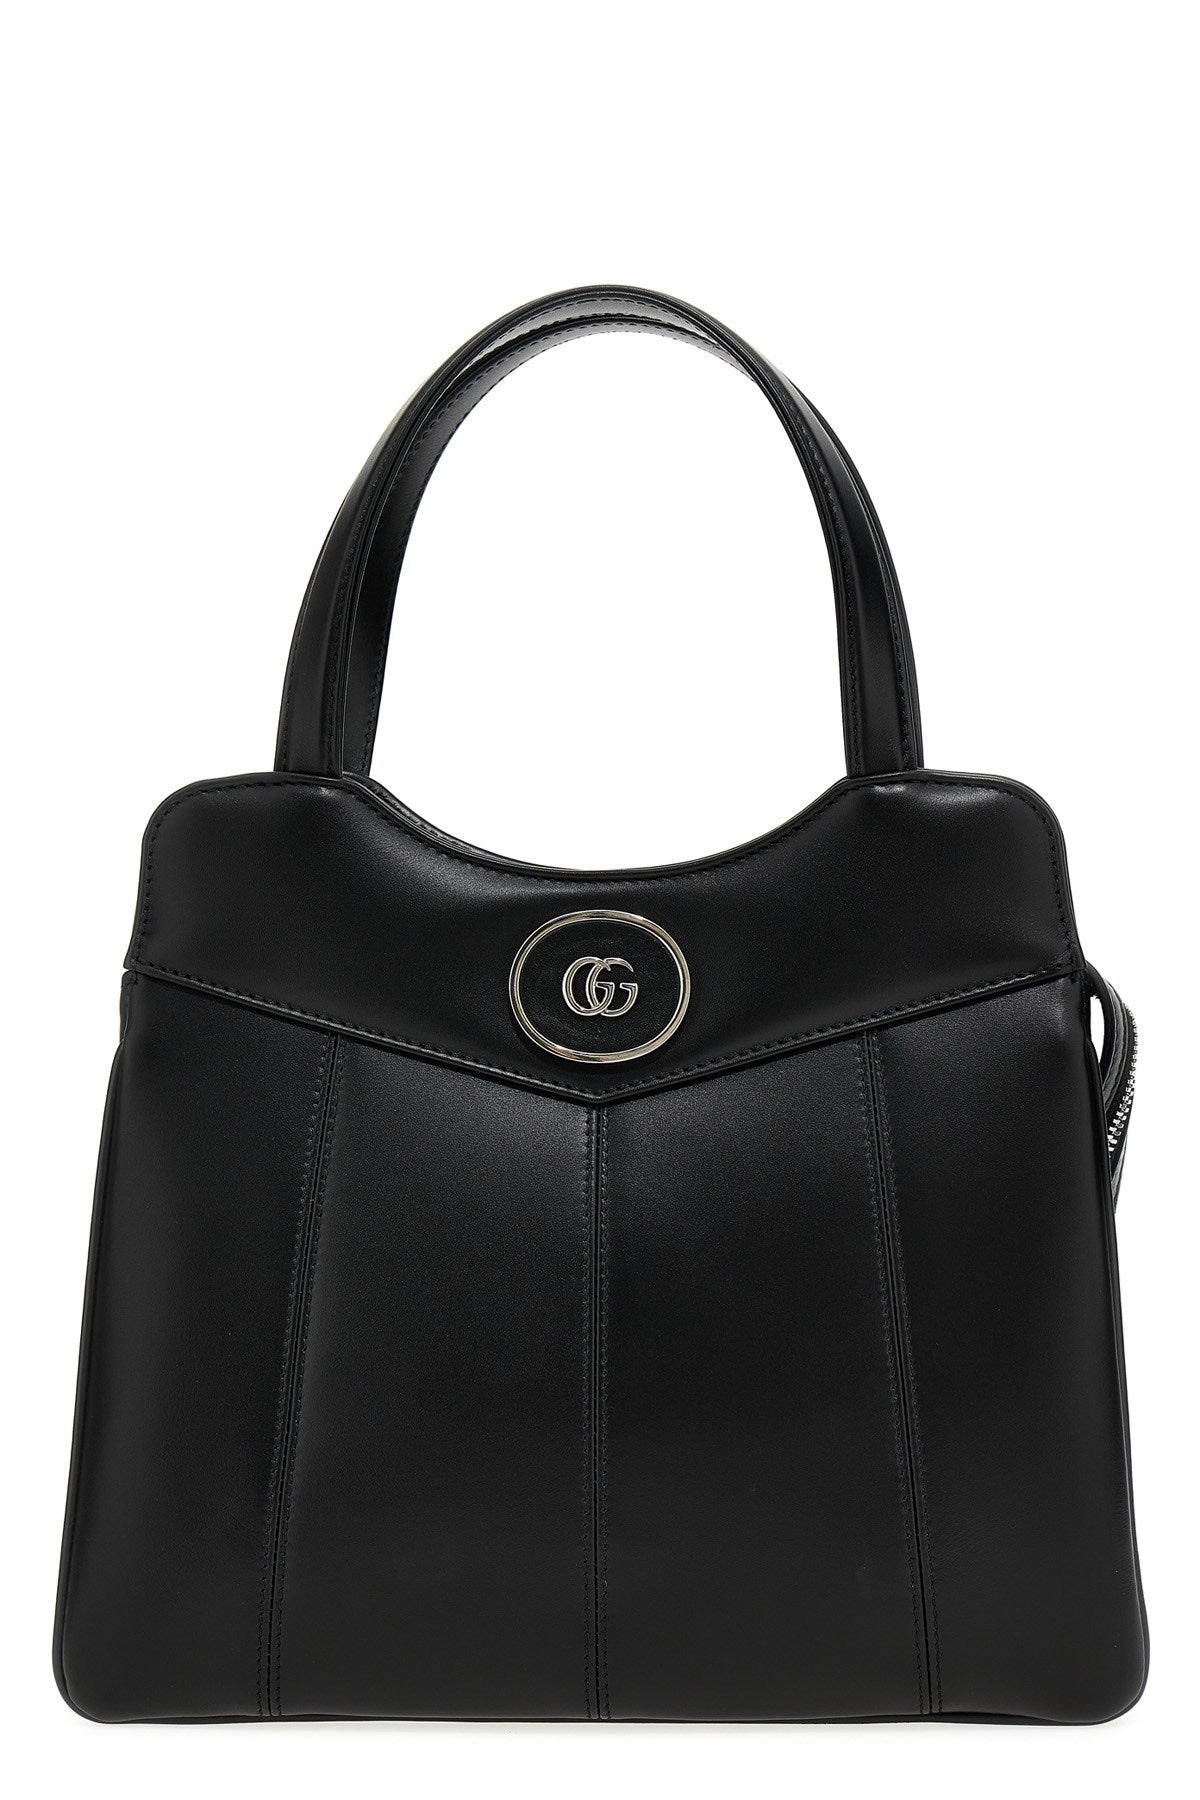 Gucci Women Petite Gg Small Handbag - 1